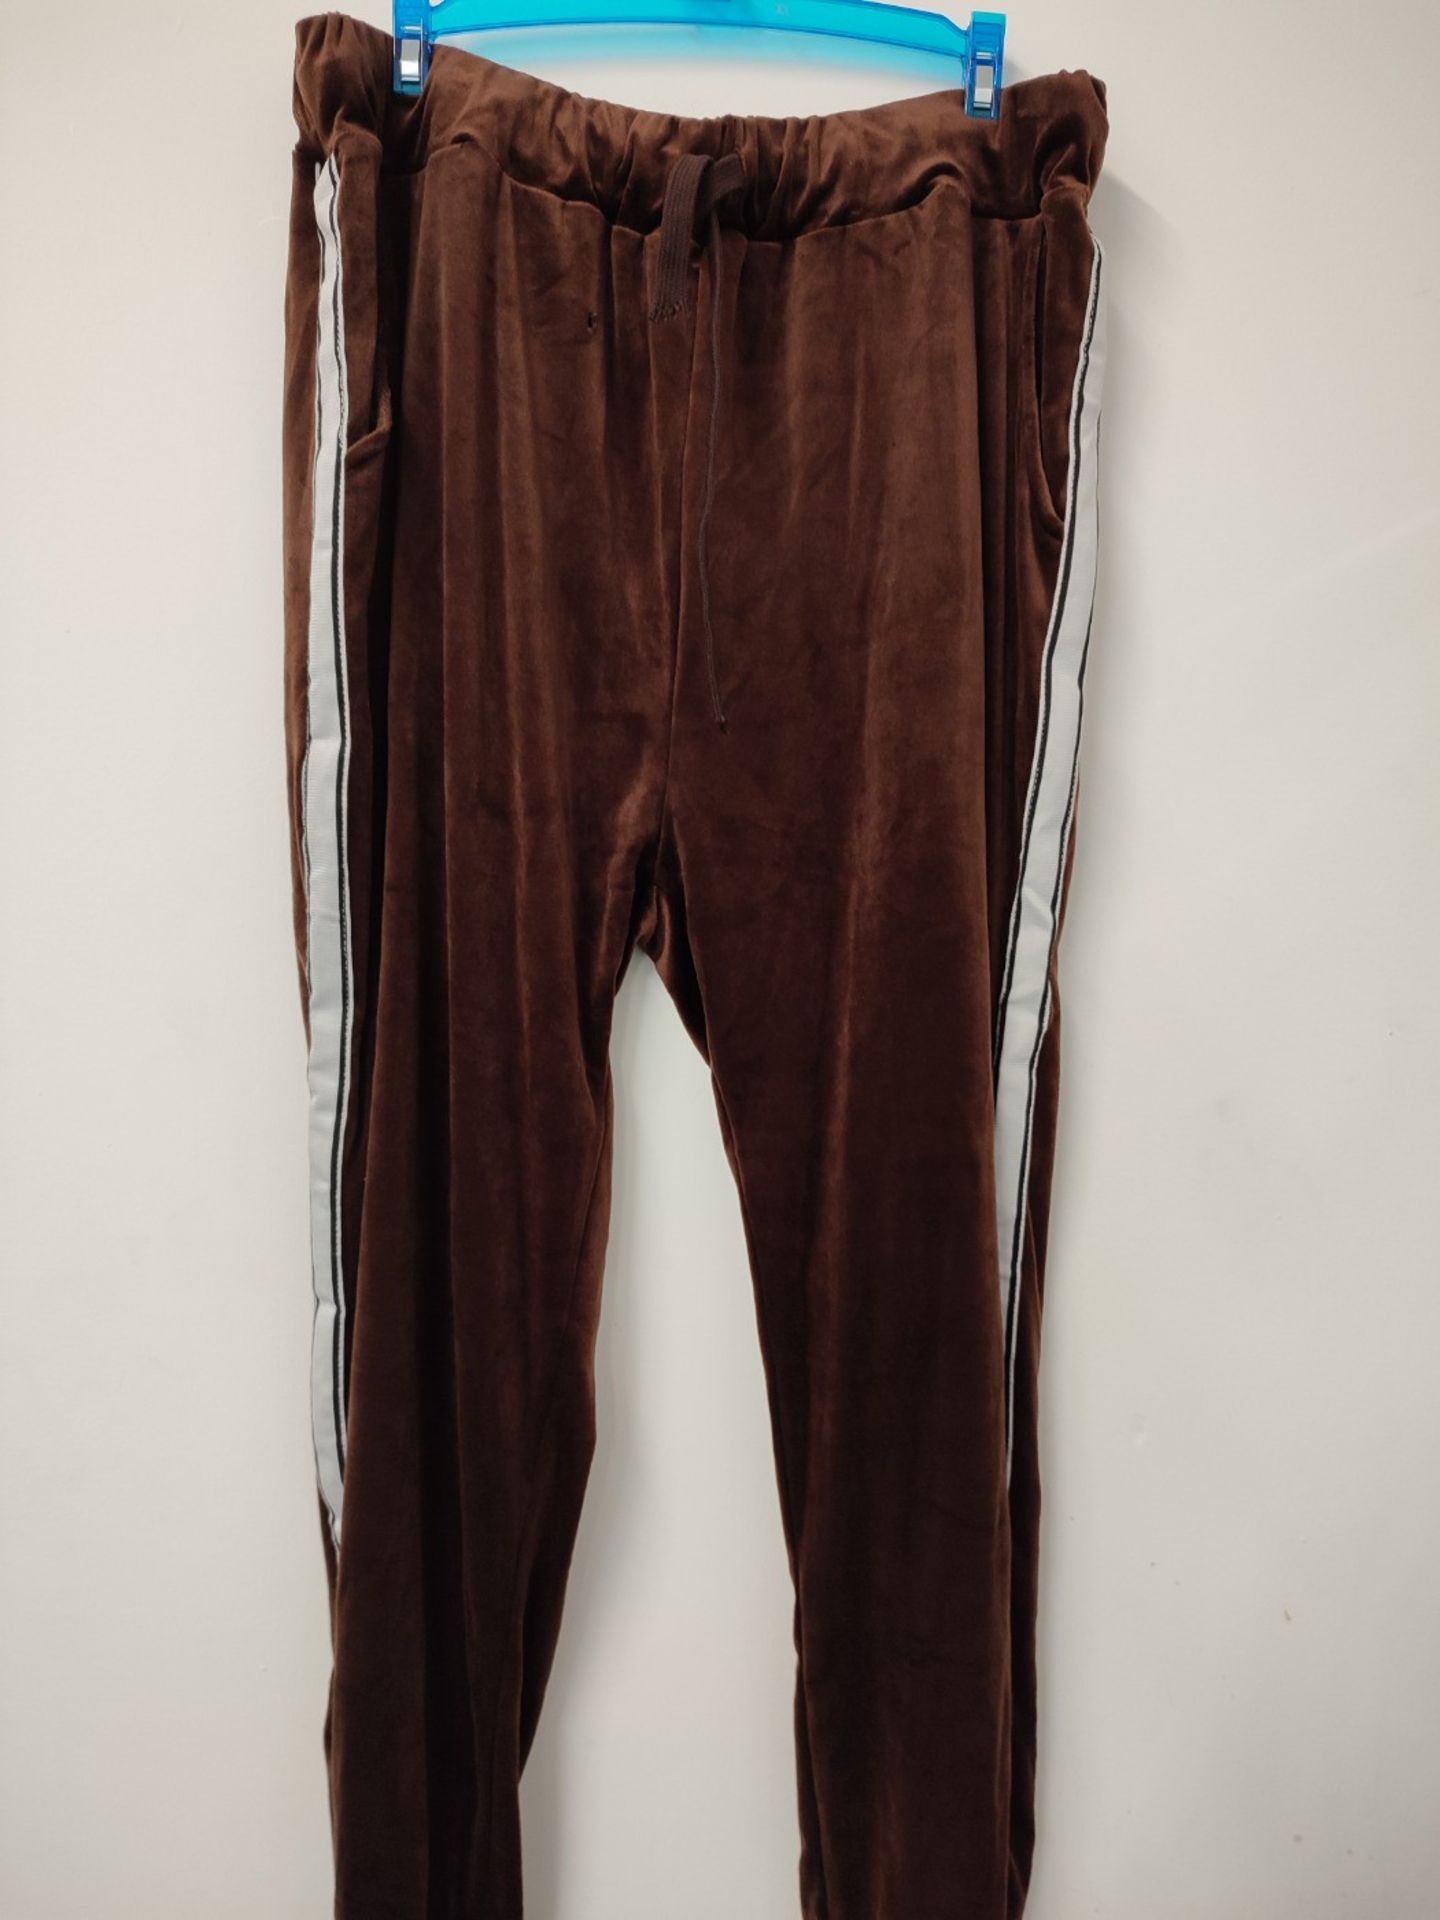 Gyabnw Women's jogging suit, leisure suit, casual tracksuit, velour sports suit, strip - Image 2 of 2